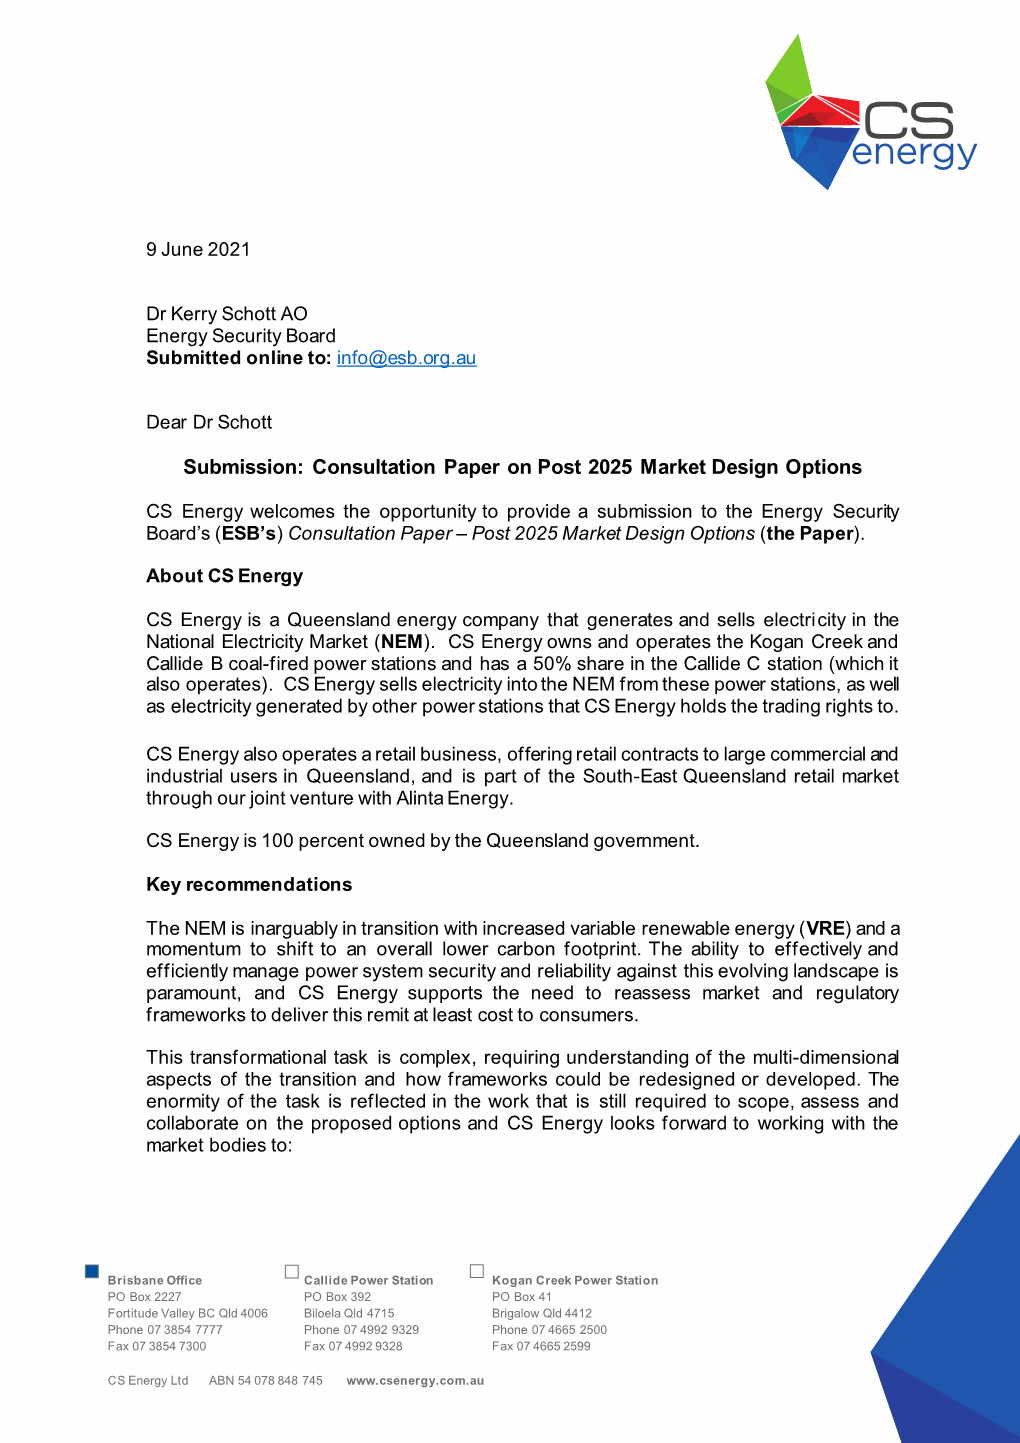 CS Energy Limited Response to P2025 Market Design Consultation Paper